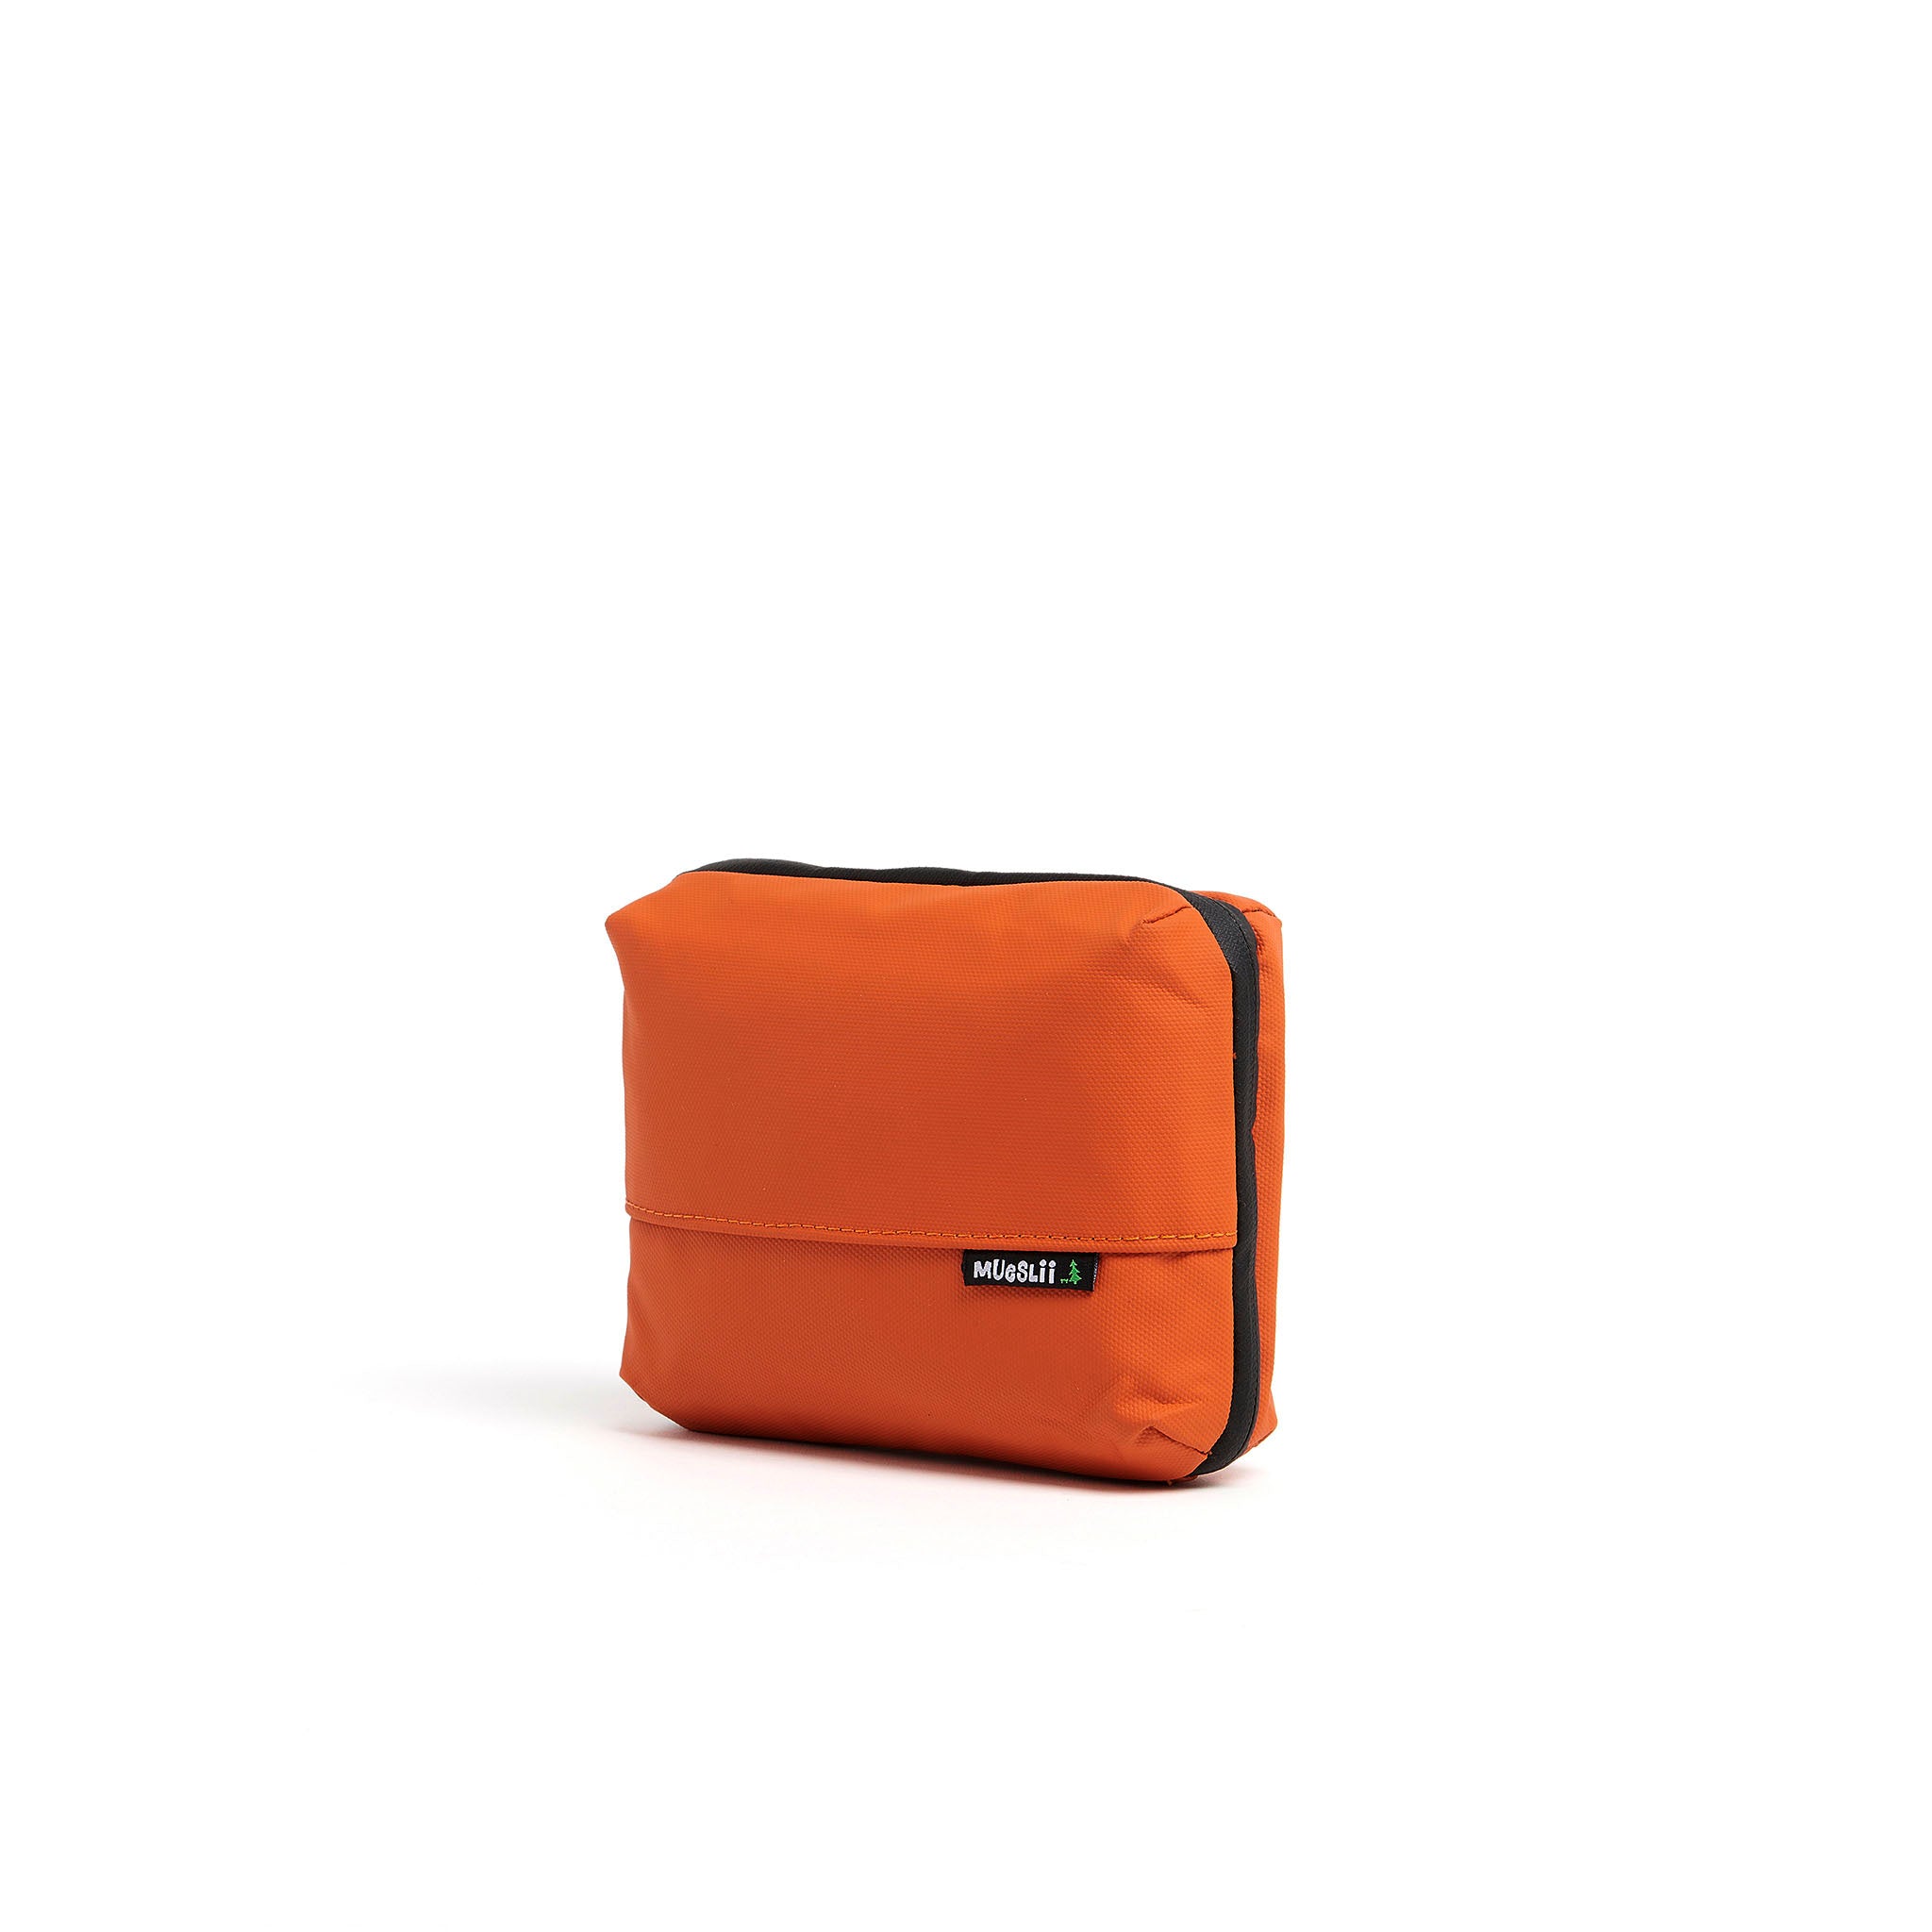 Mueslii tech case, made of PU coated waterproof nylon, color orange, side view.